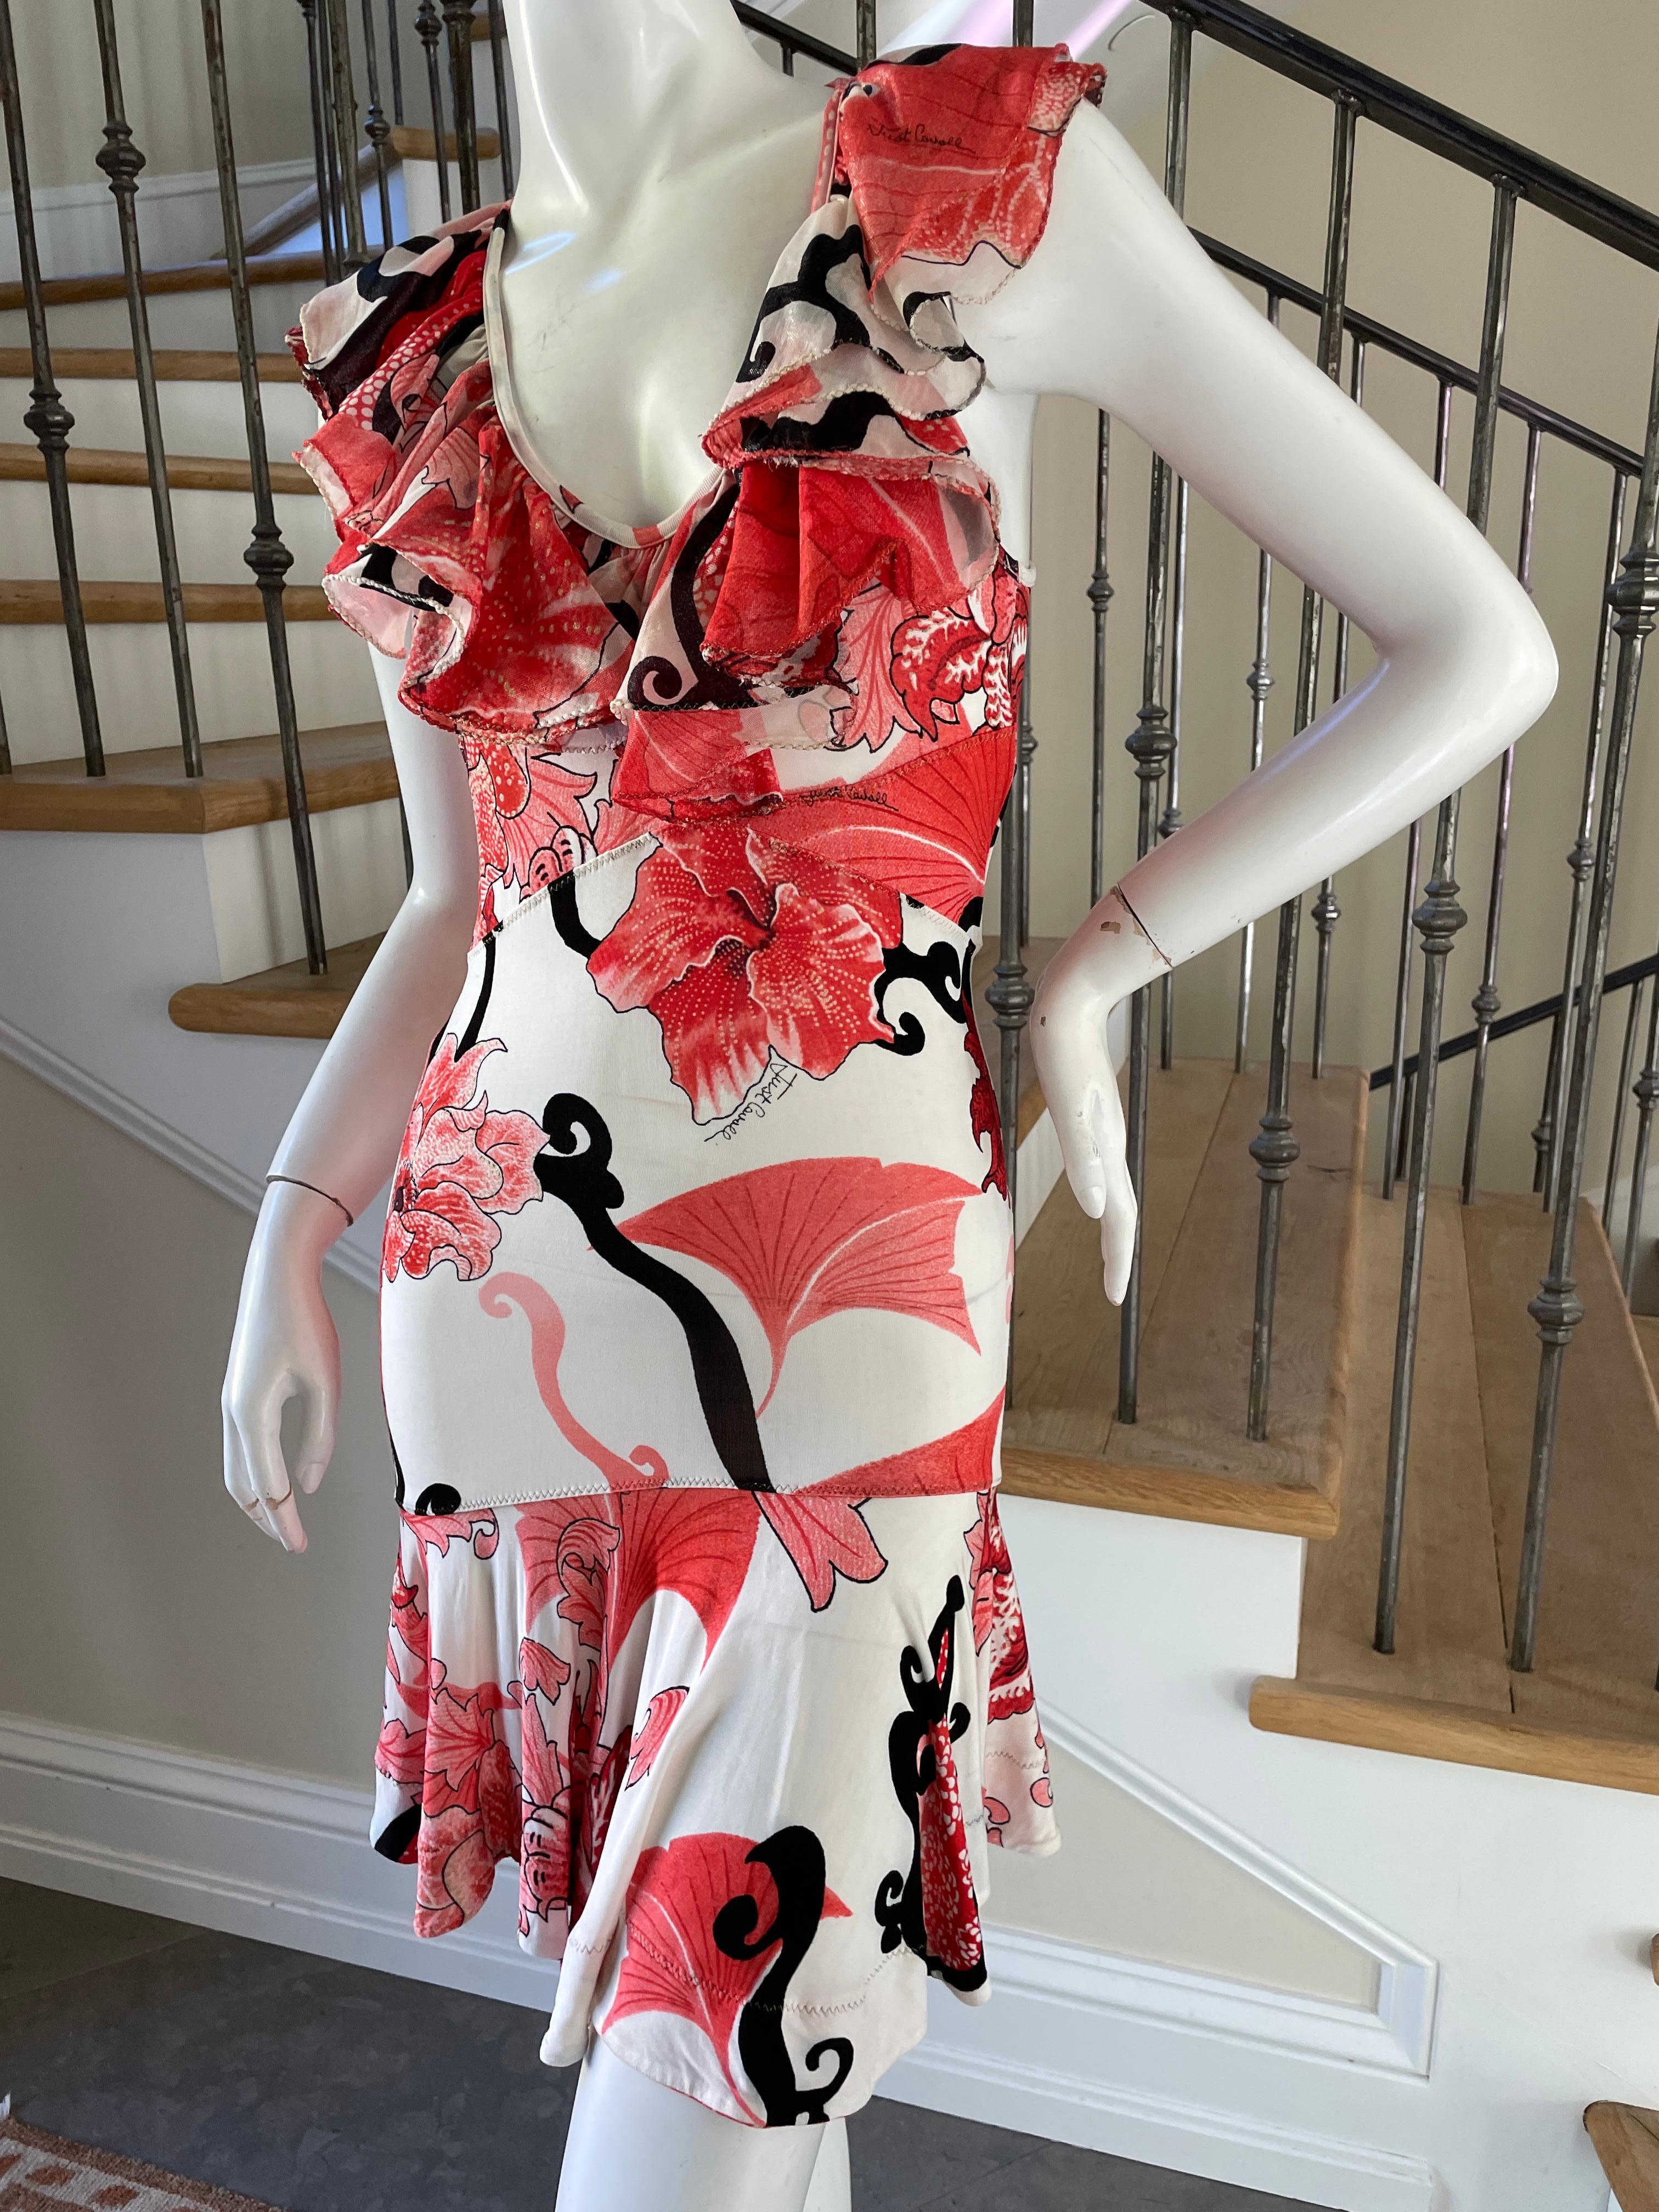 Roberto Cavalli for Just Cavalli Low Cut Baroque Pattern Mini Dress.
So sweet.
Size 40
Bust 34